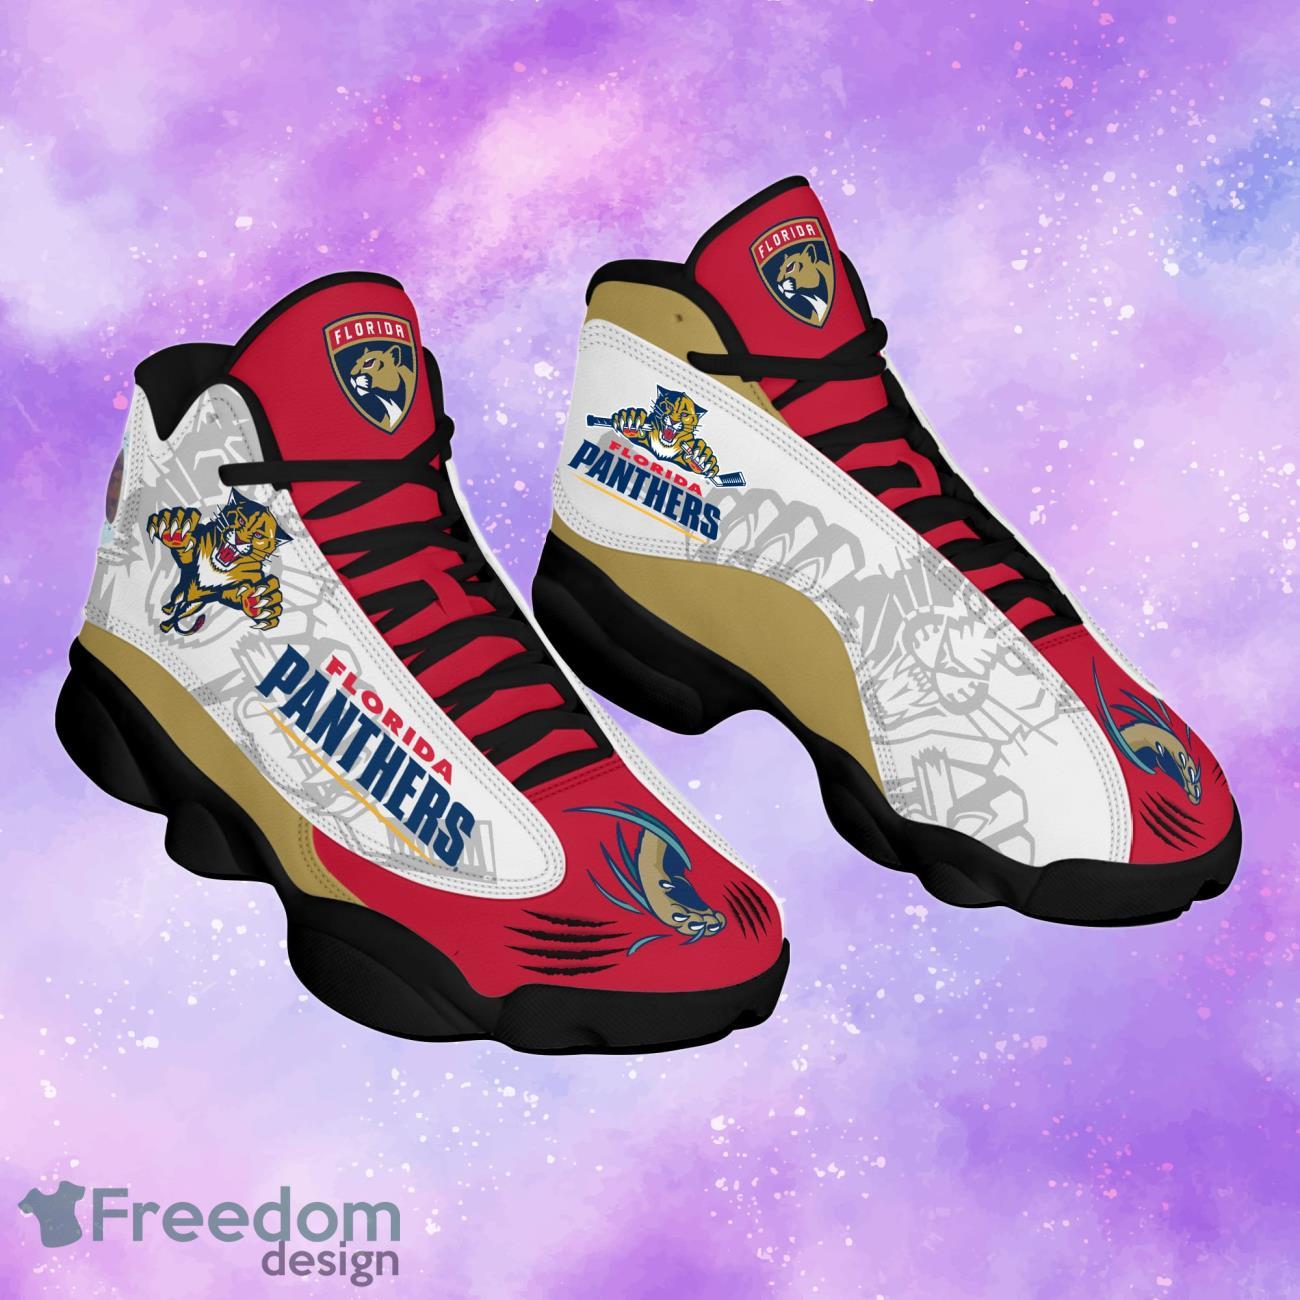 Carolina Panthers Football Team Air Jordan 13 Custom Name Sneakers